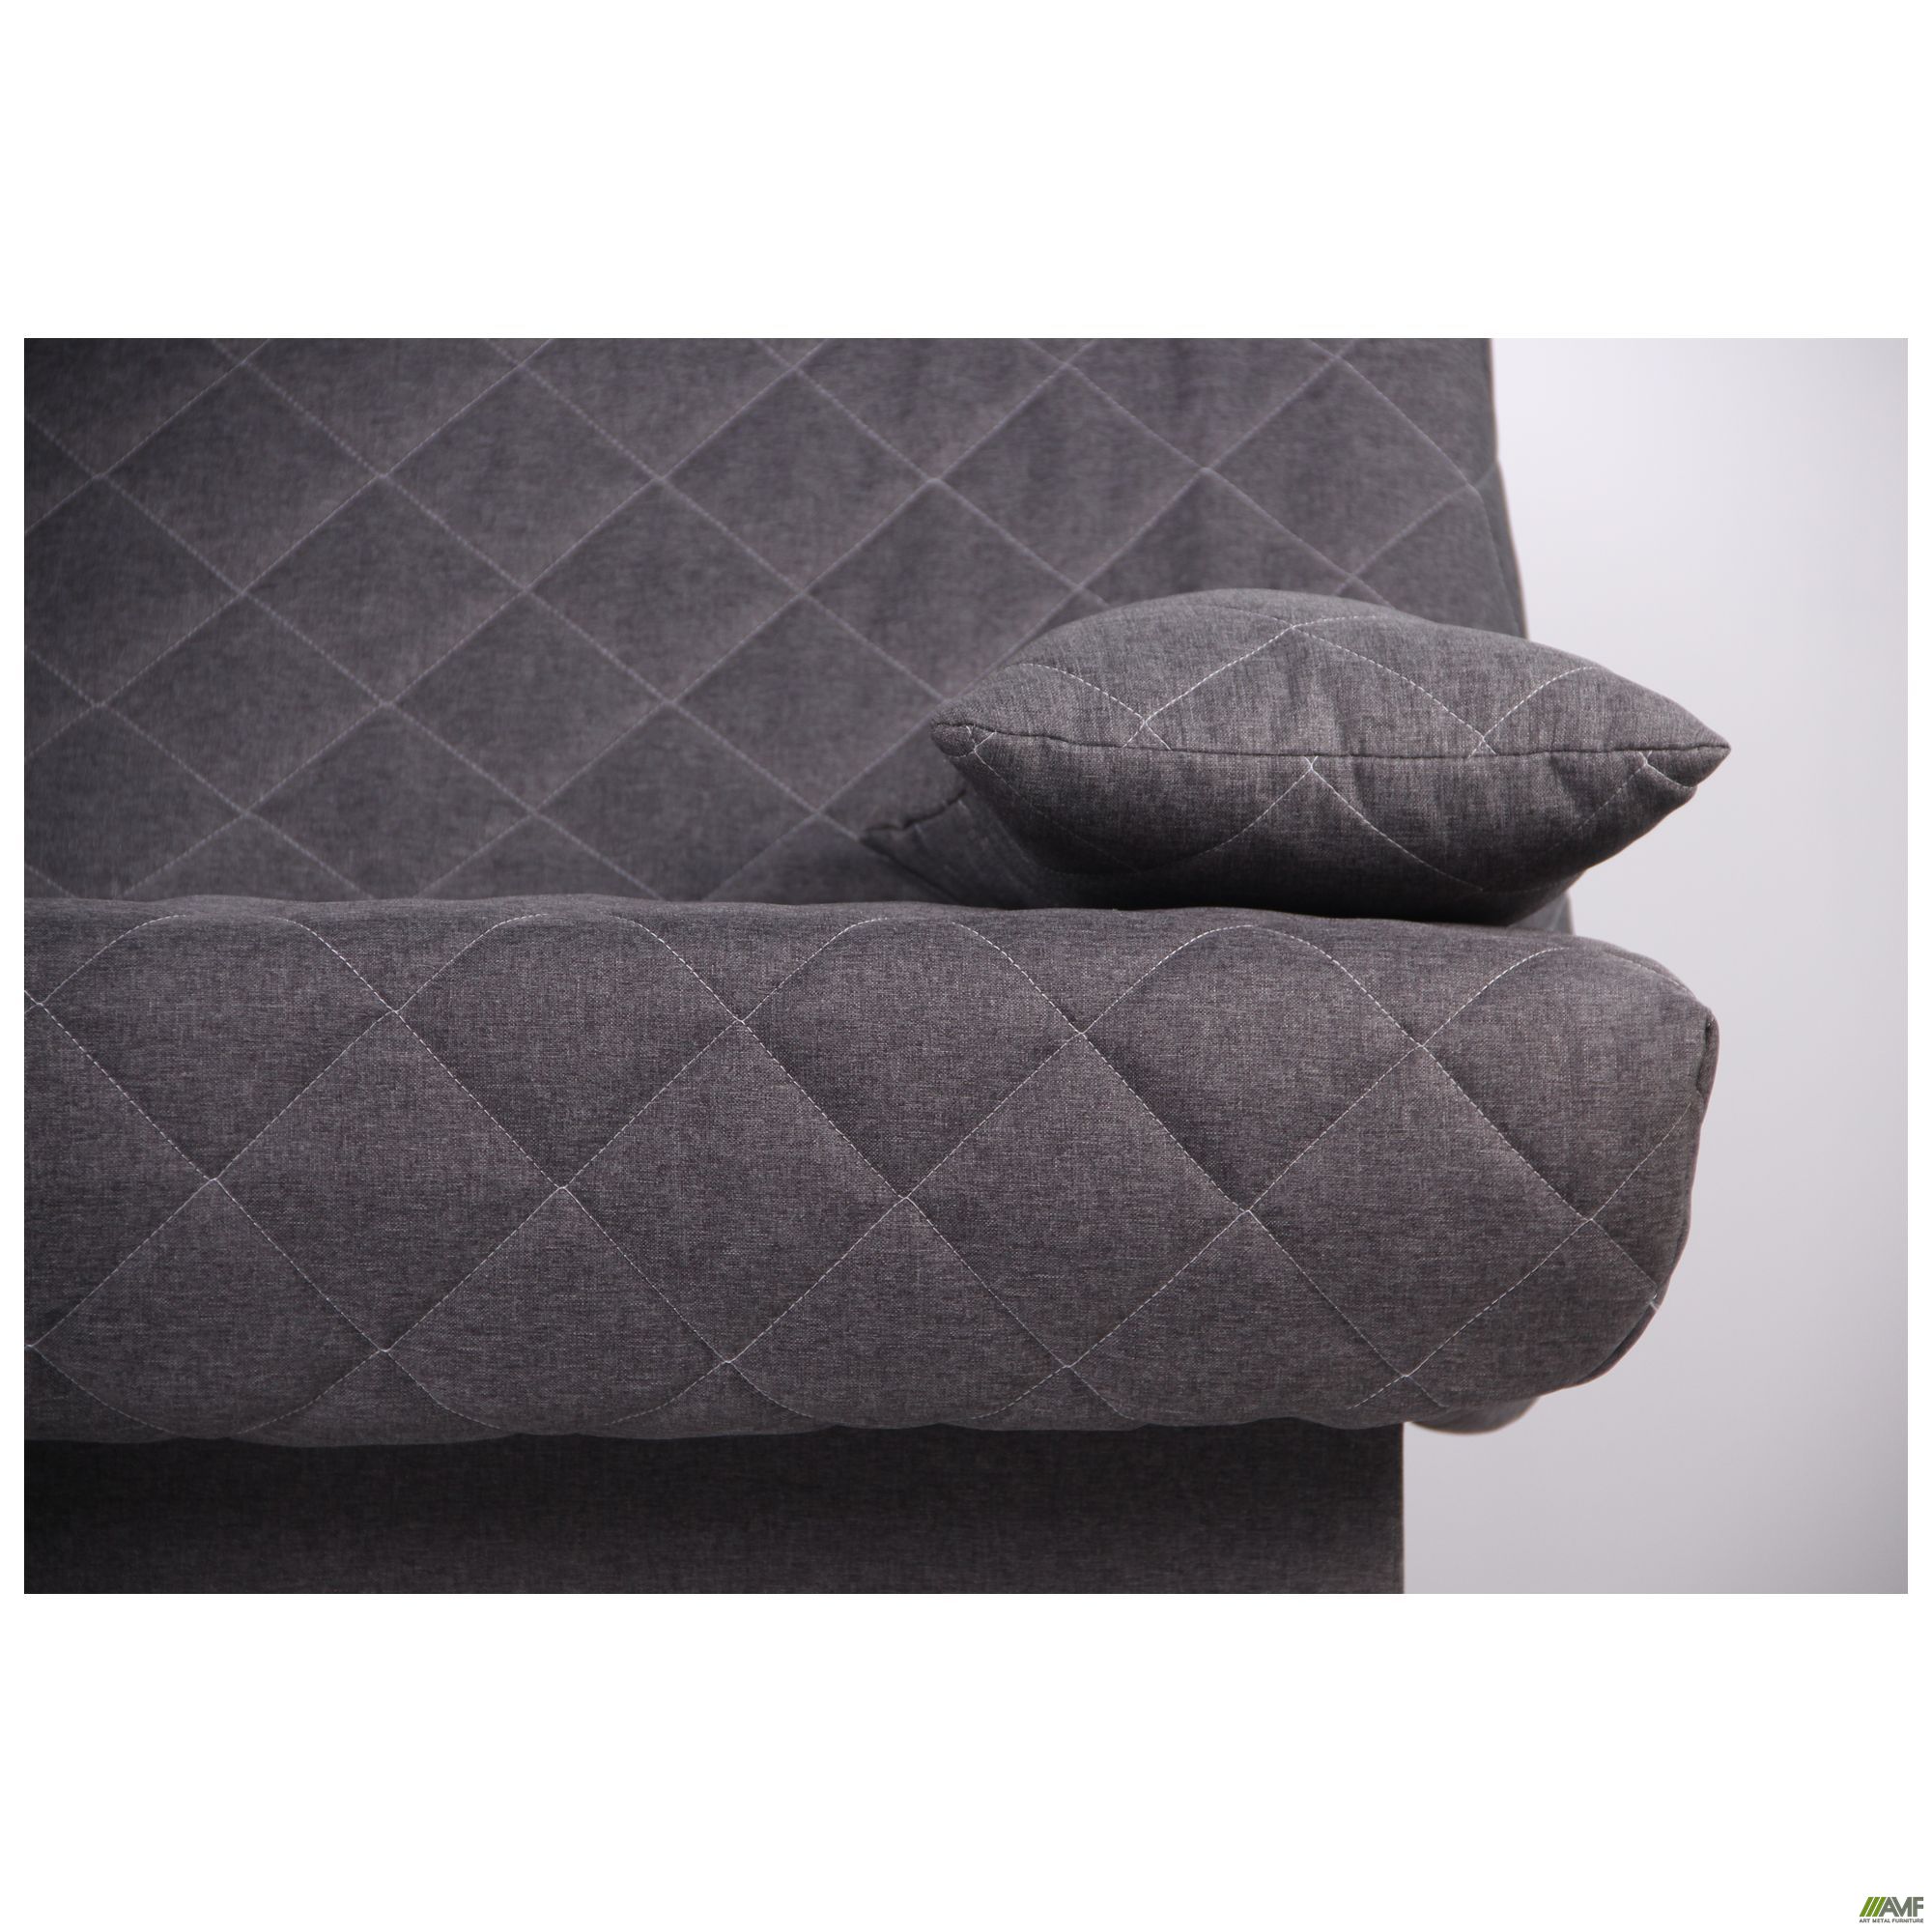 Фото 10 - Диван Ньюс механизм клик-кляк Саванна Нова 14 DK. Grey с двумя подушками со штрихкодом EAN 